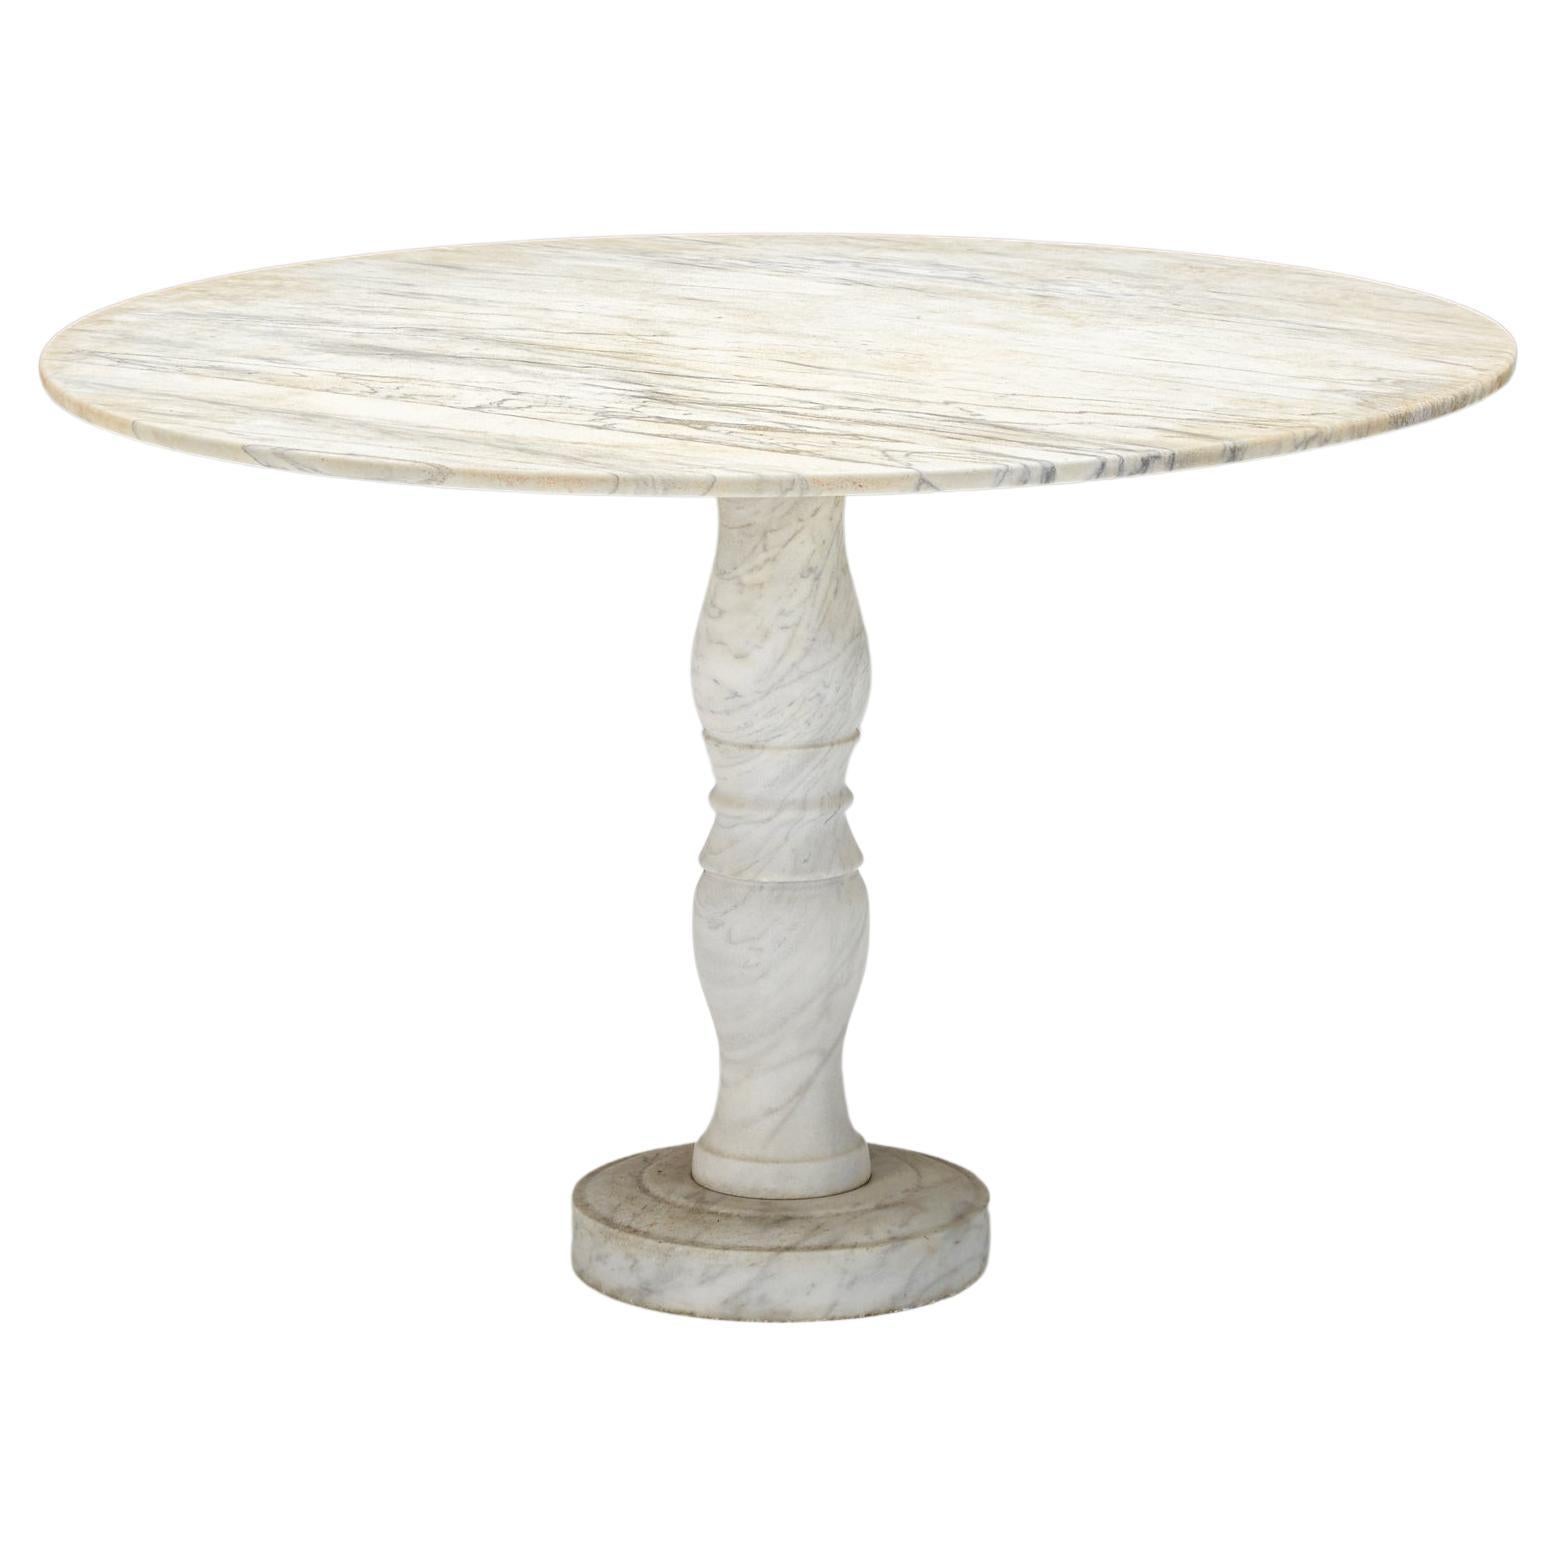 Mangiarotti Style Carrara Marble Dining Table, Garden Furniture, 1950's